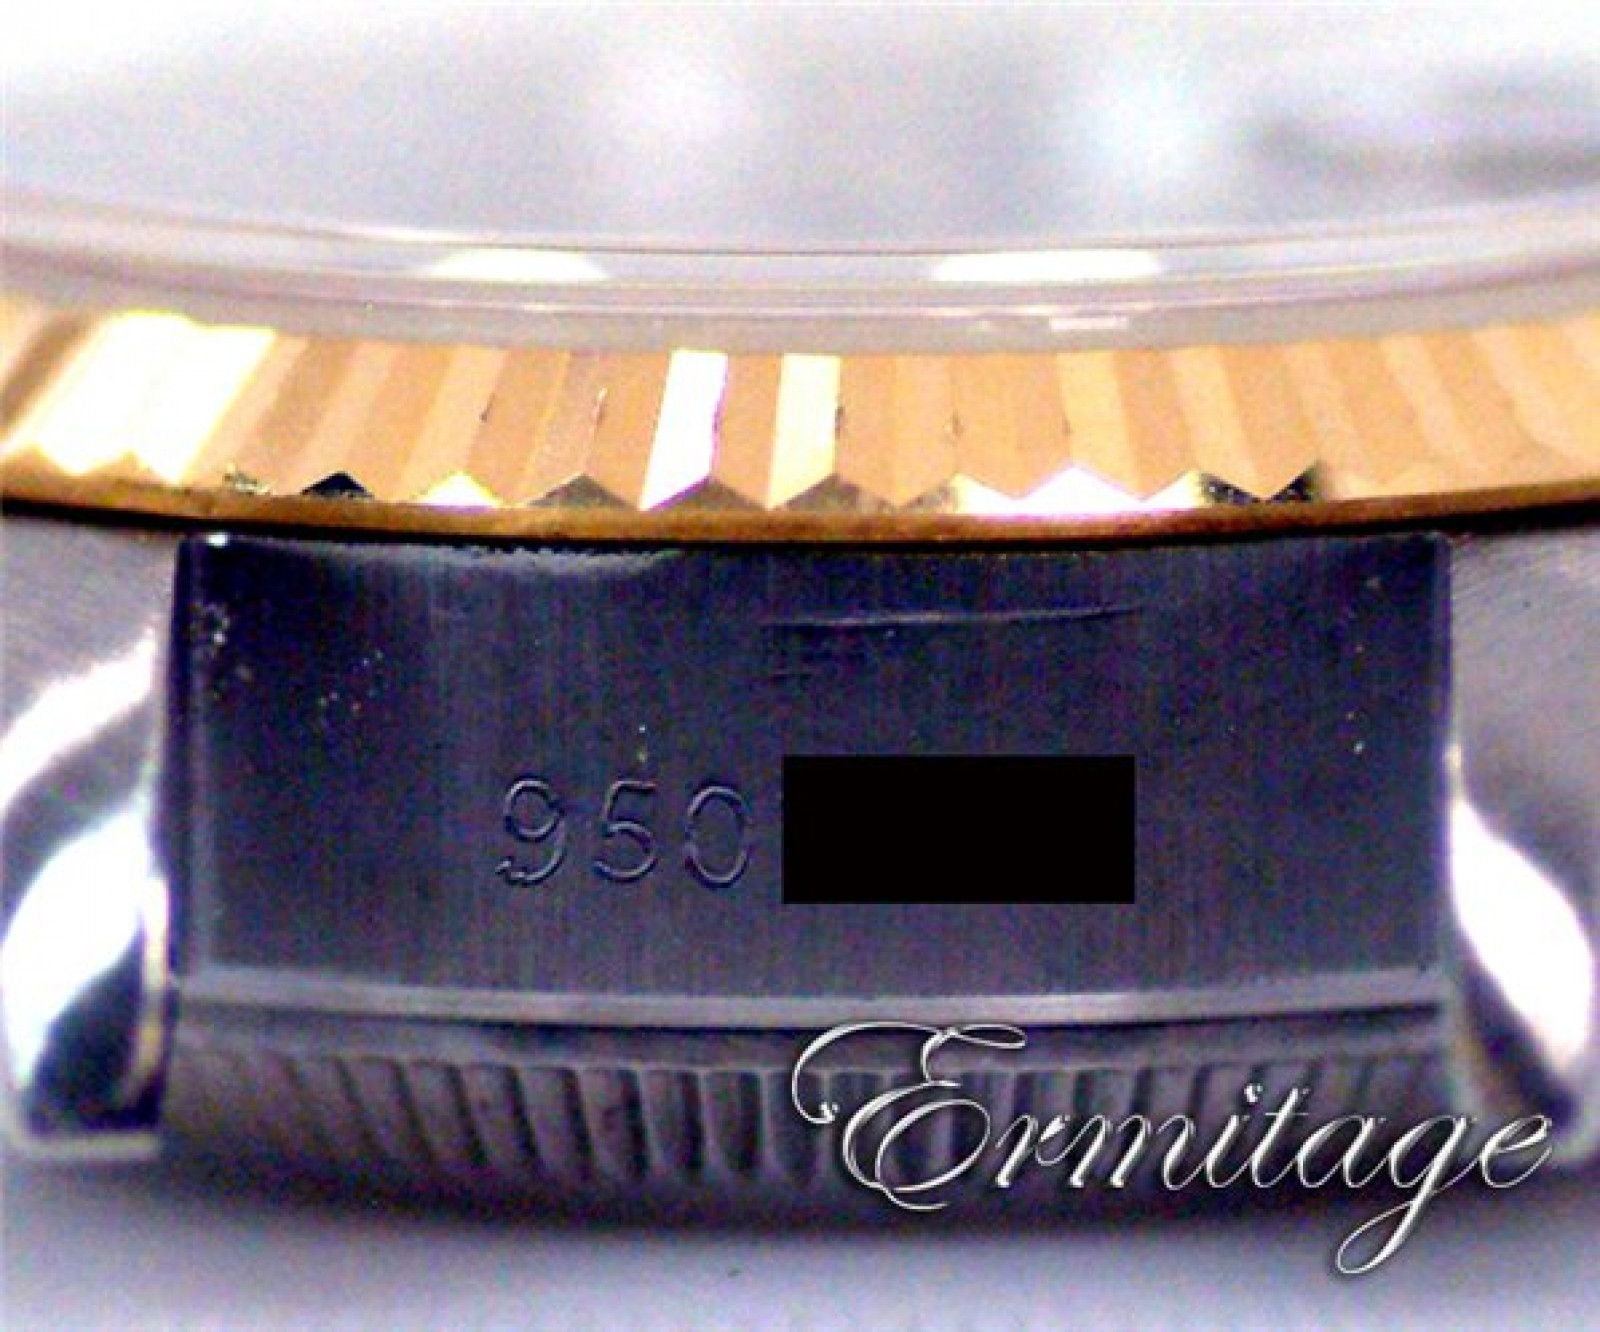 Classic Gold & Steel Rolex Datejust 69173